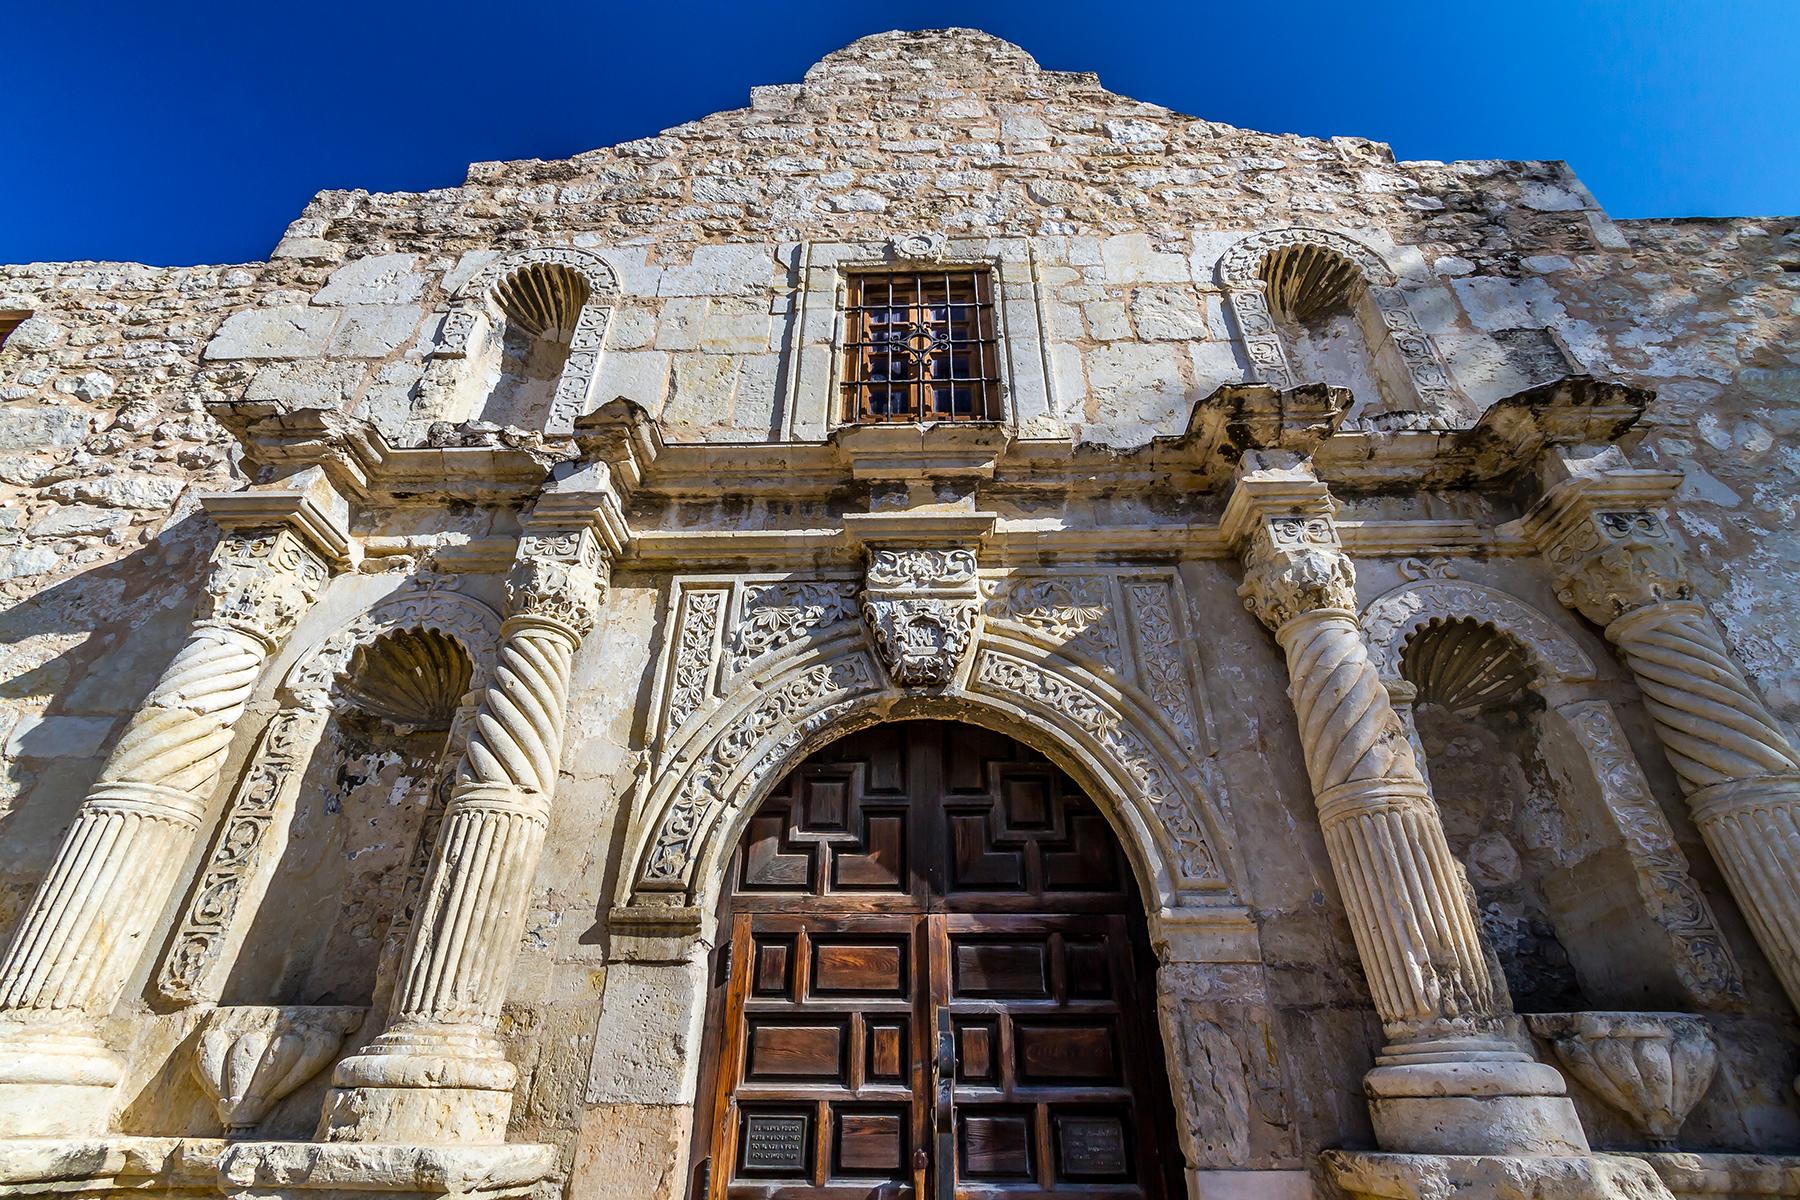 The Alamo, Texas